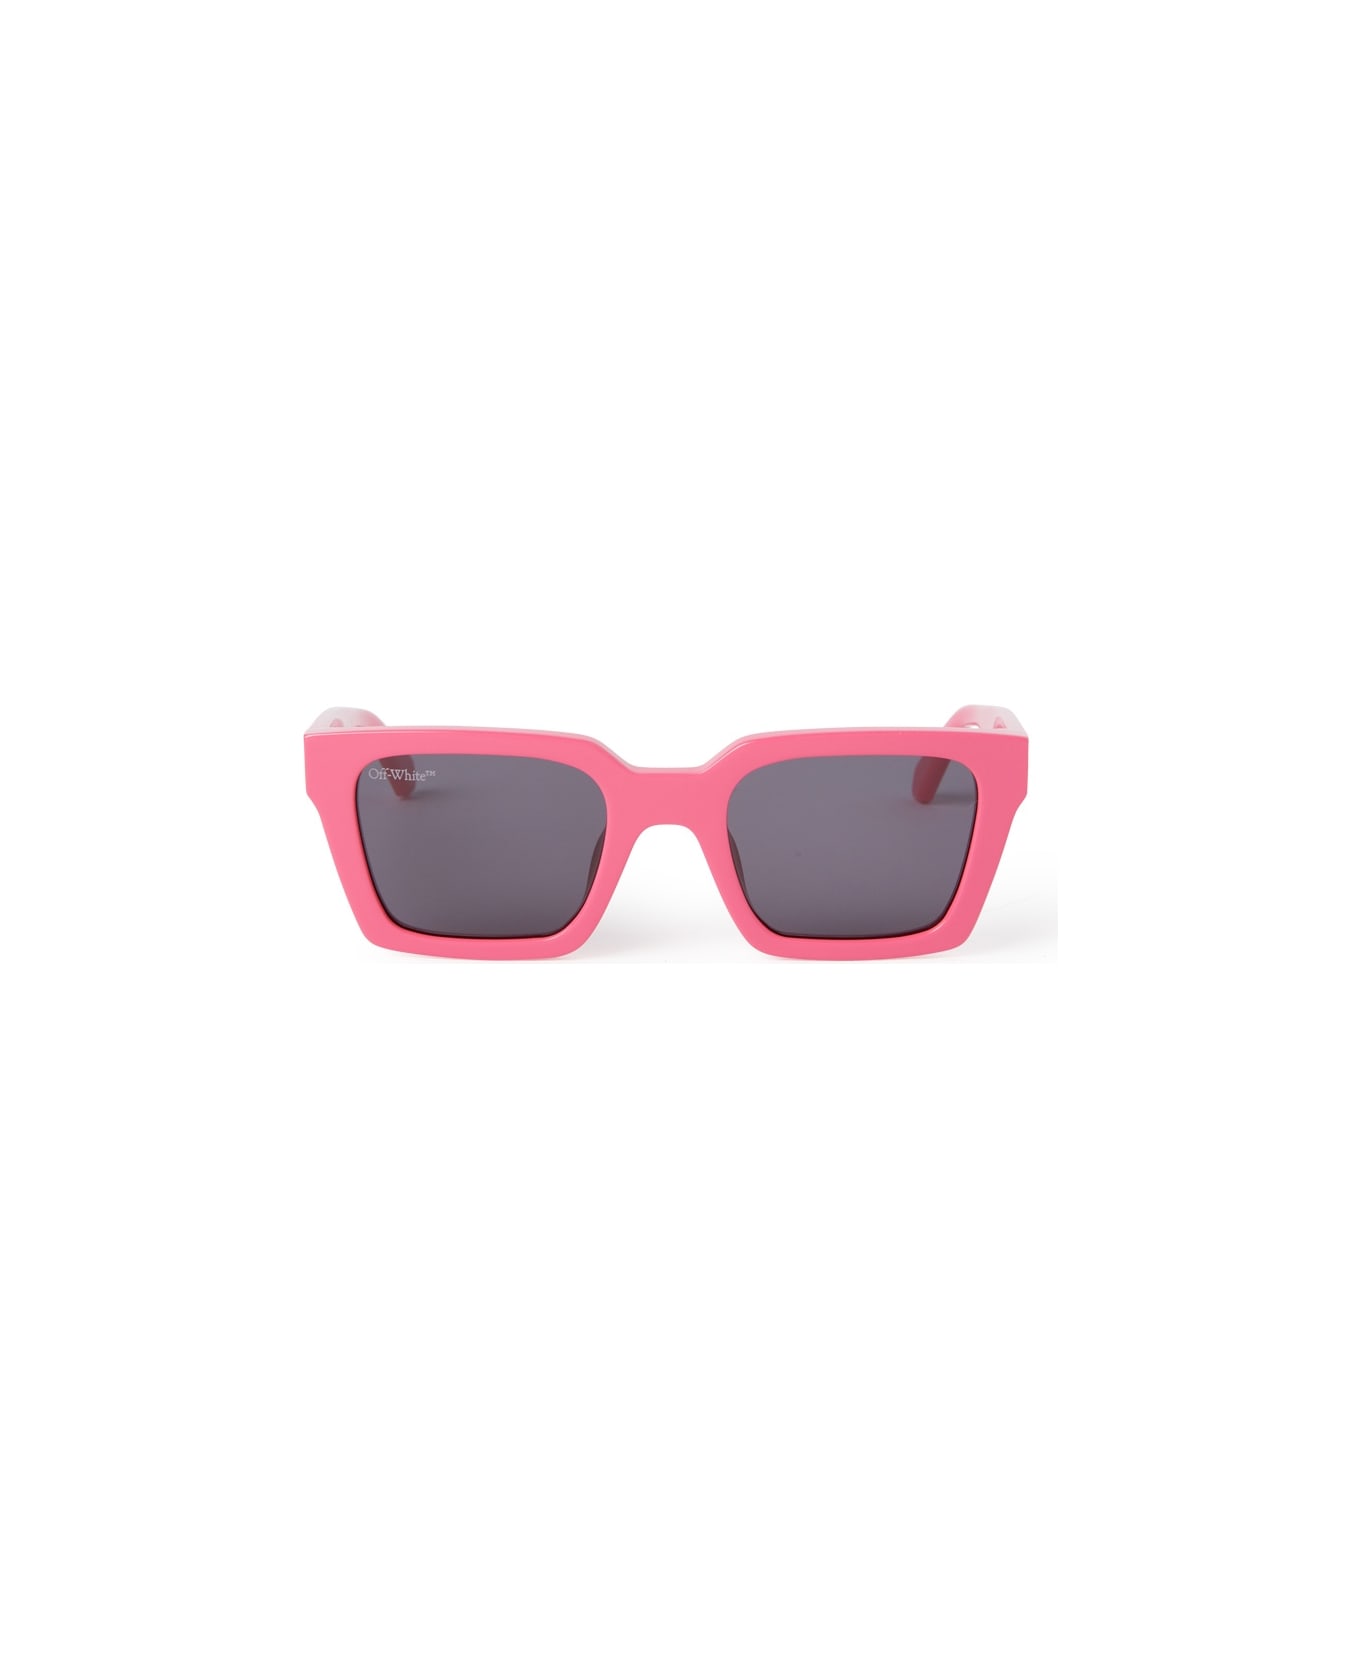 Off-White PALERMO SUNGLASSES Sunglasses - Fuchsia